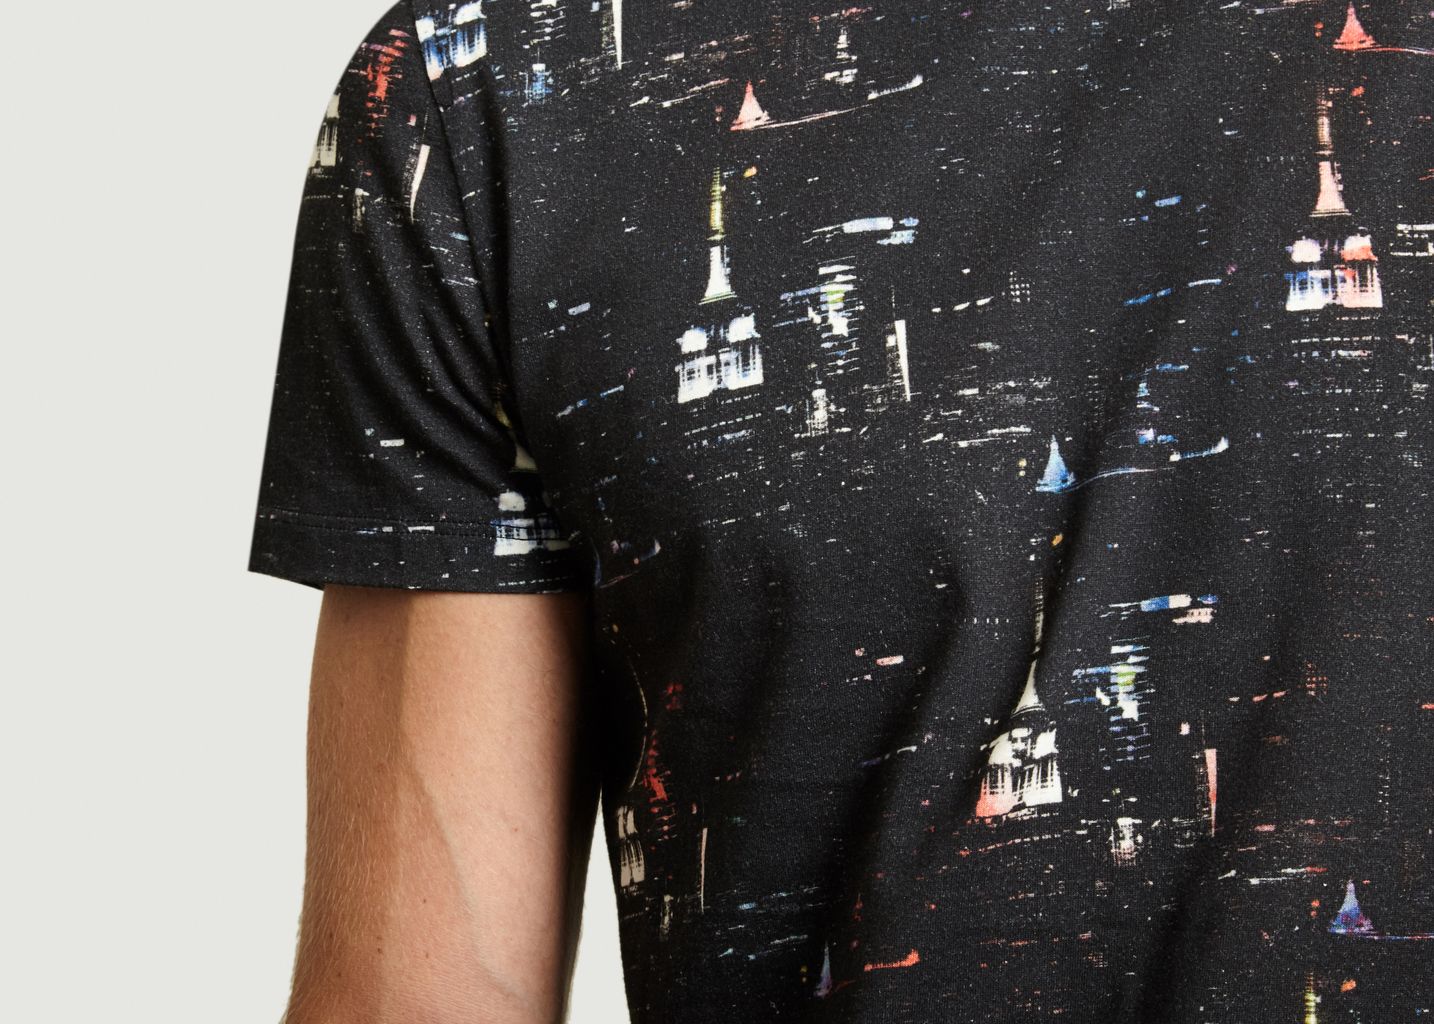 T-Shirt Print Skycrapers - M.X Maxime Simoëns